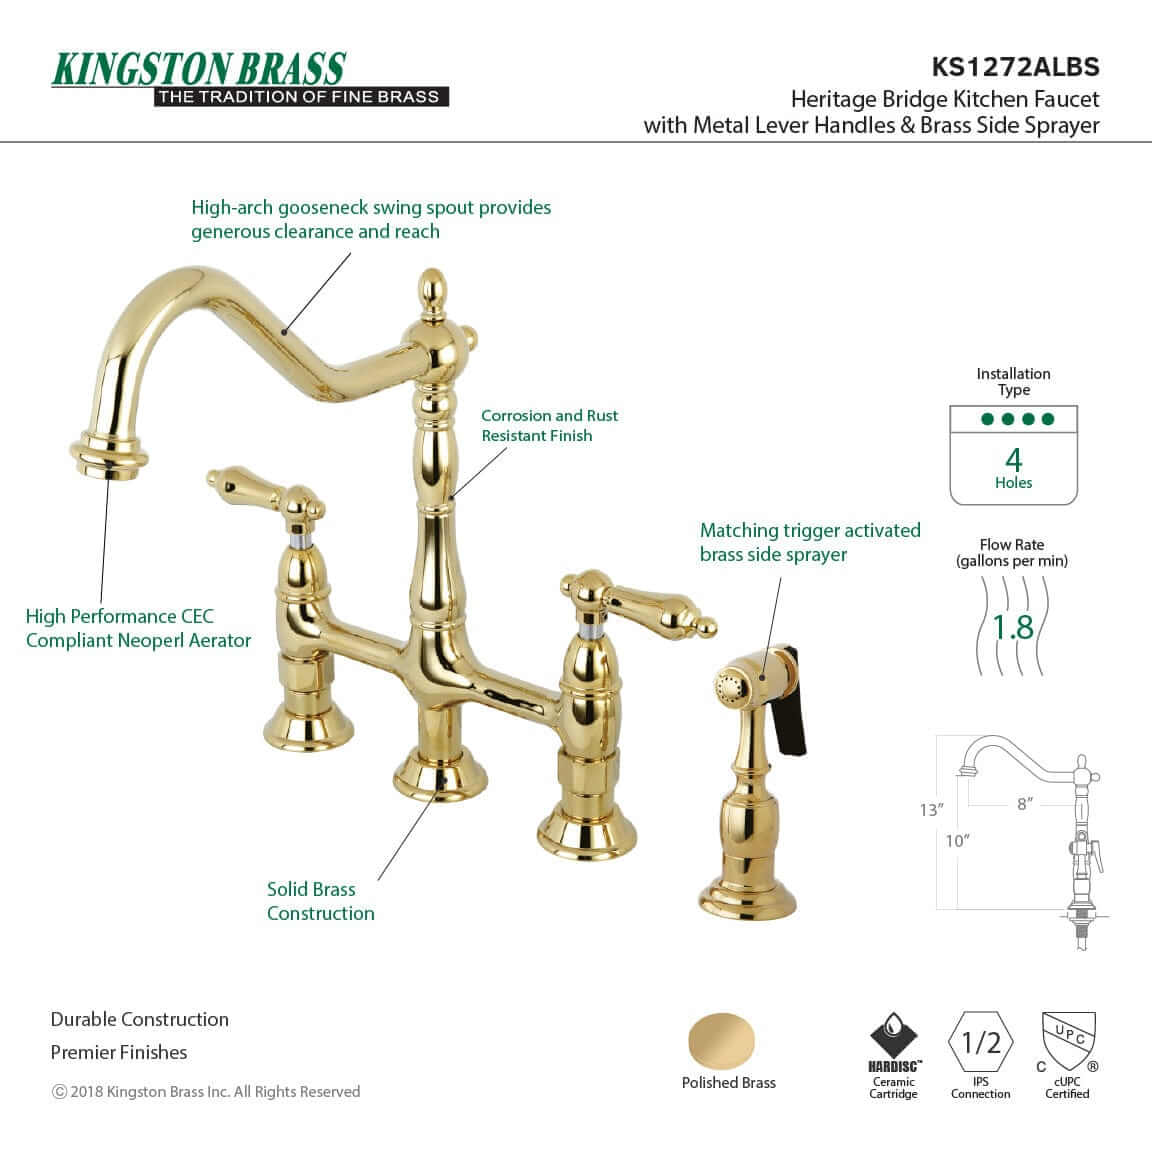 KINGSTON Brass Heritage Bridge Kitchen Faucet with Brass Sprayer - Polished Brass